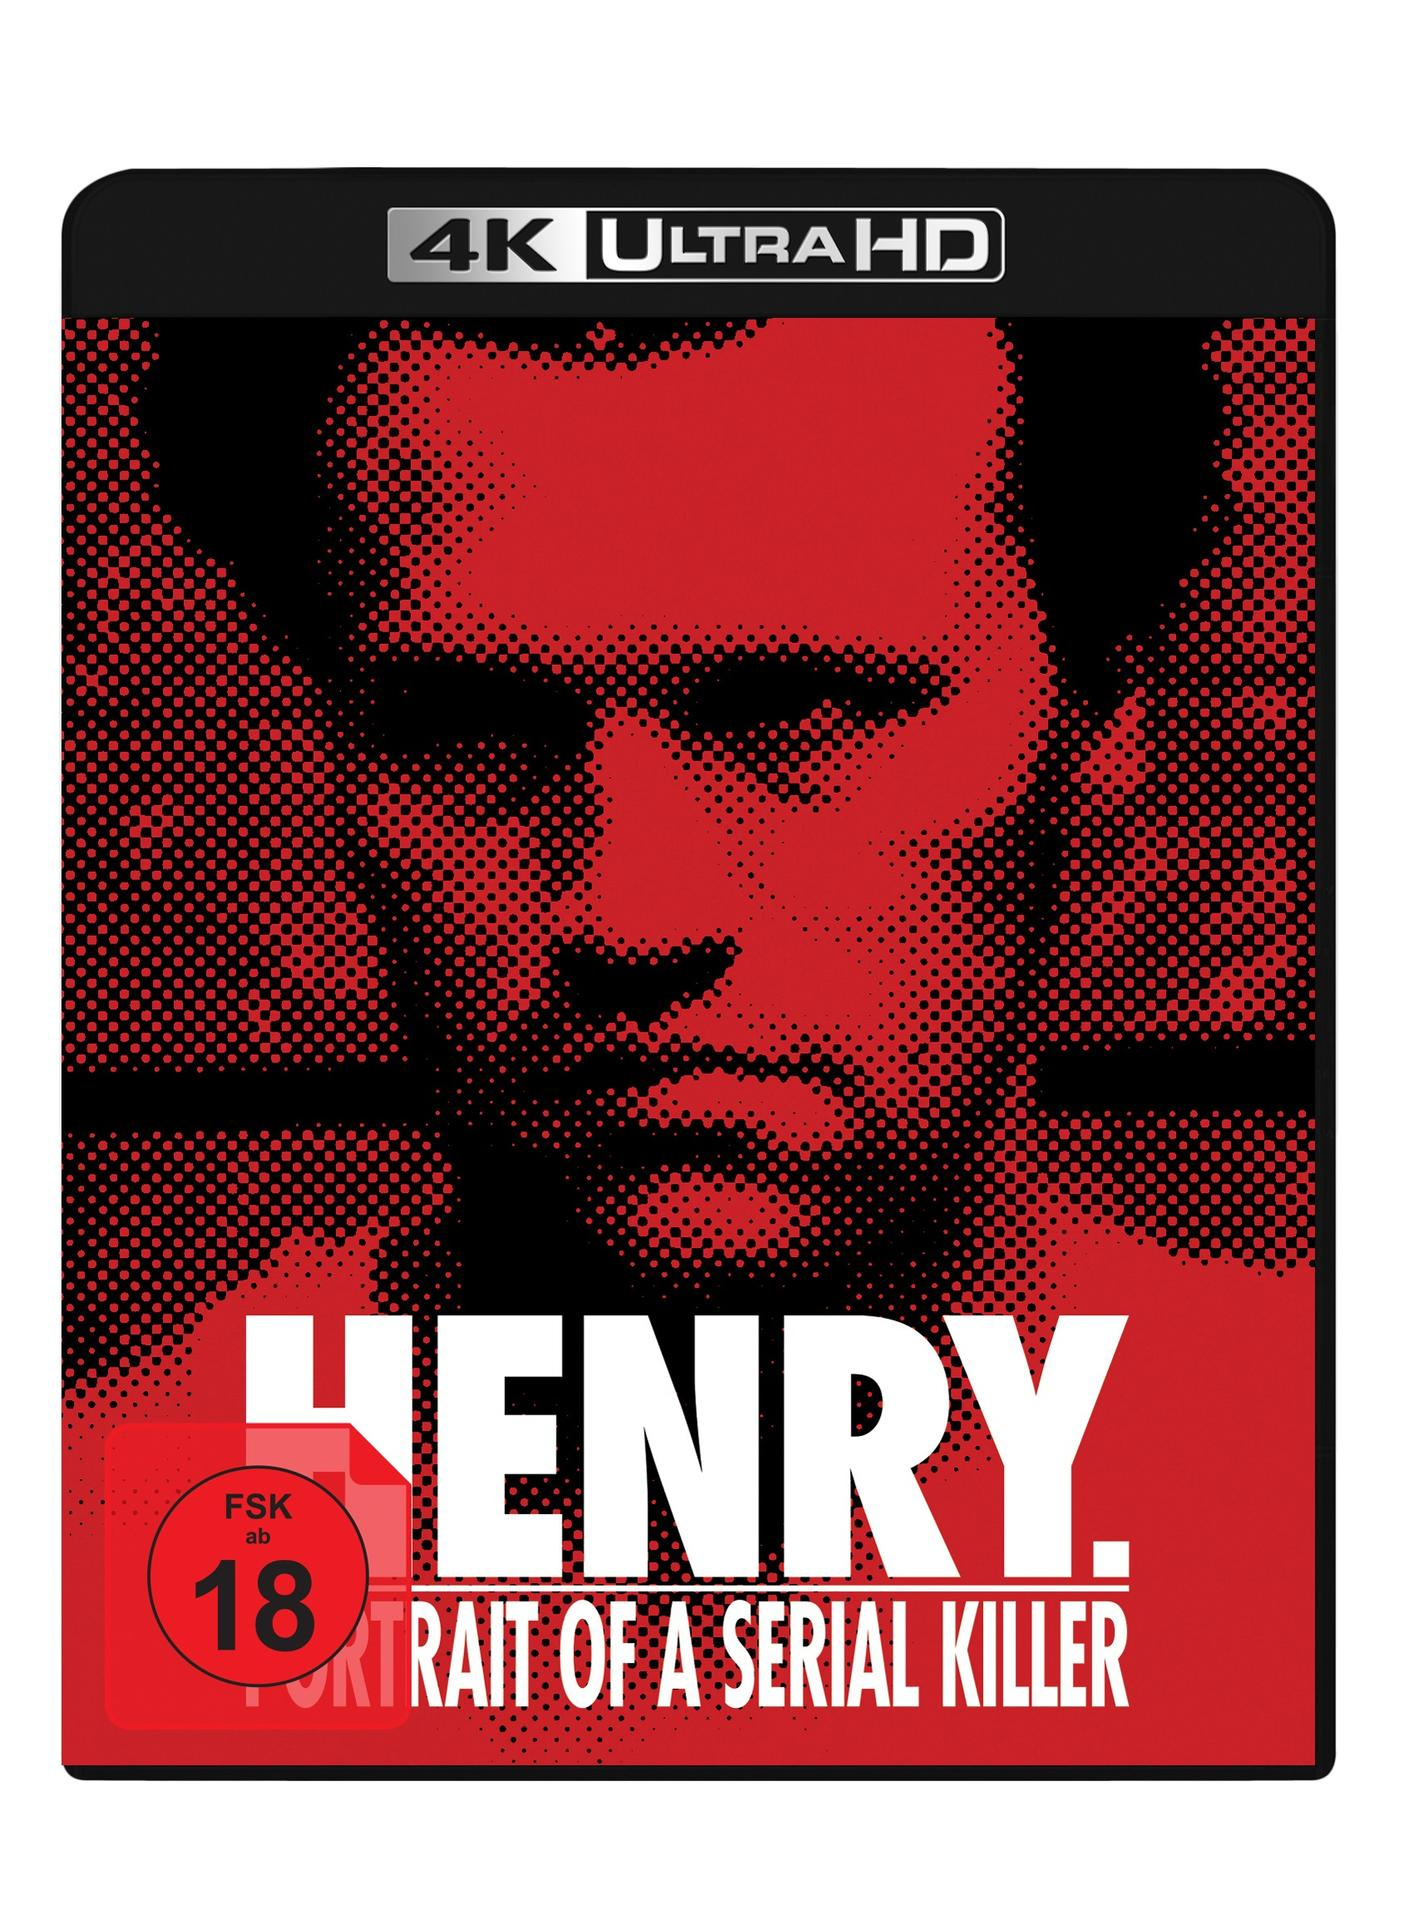 Ultra Blu-ray a Serial Killer + Blu-ray Portrait Henry: HD of 4K